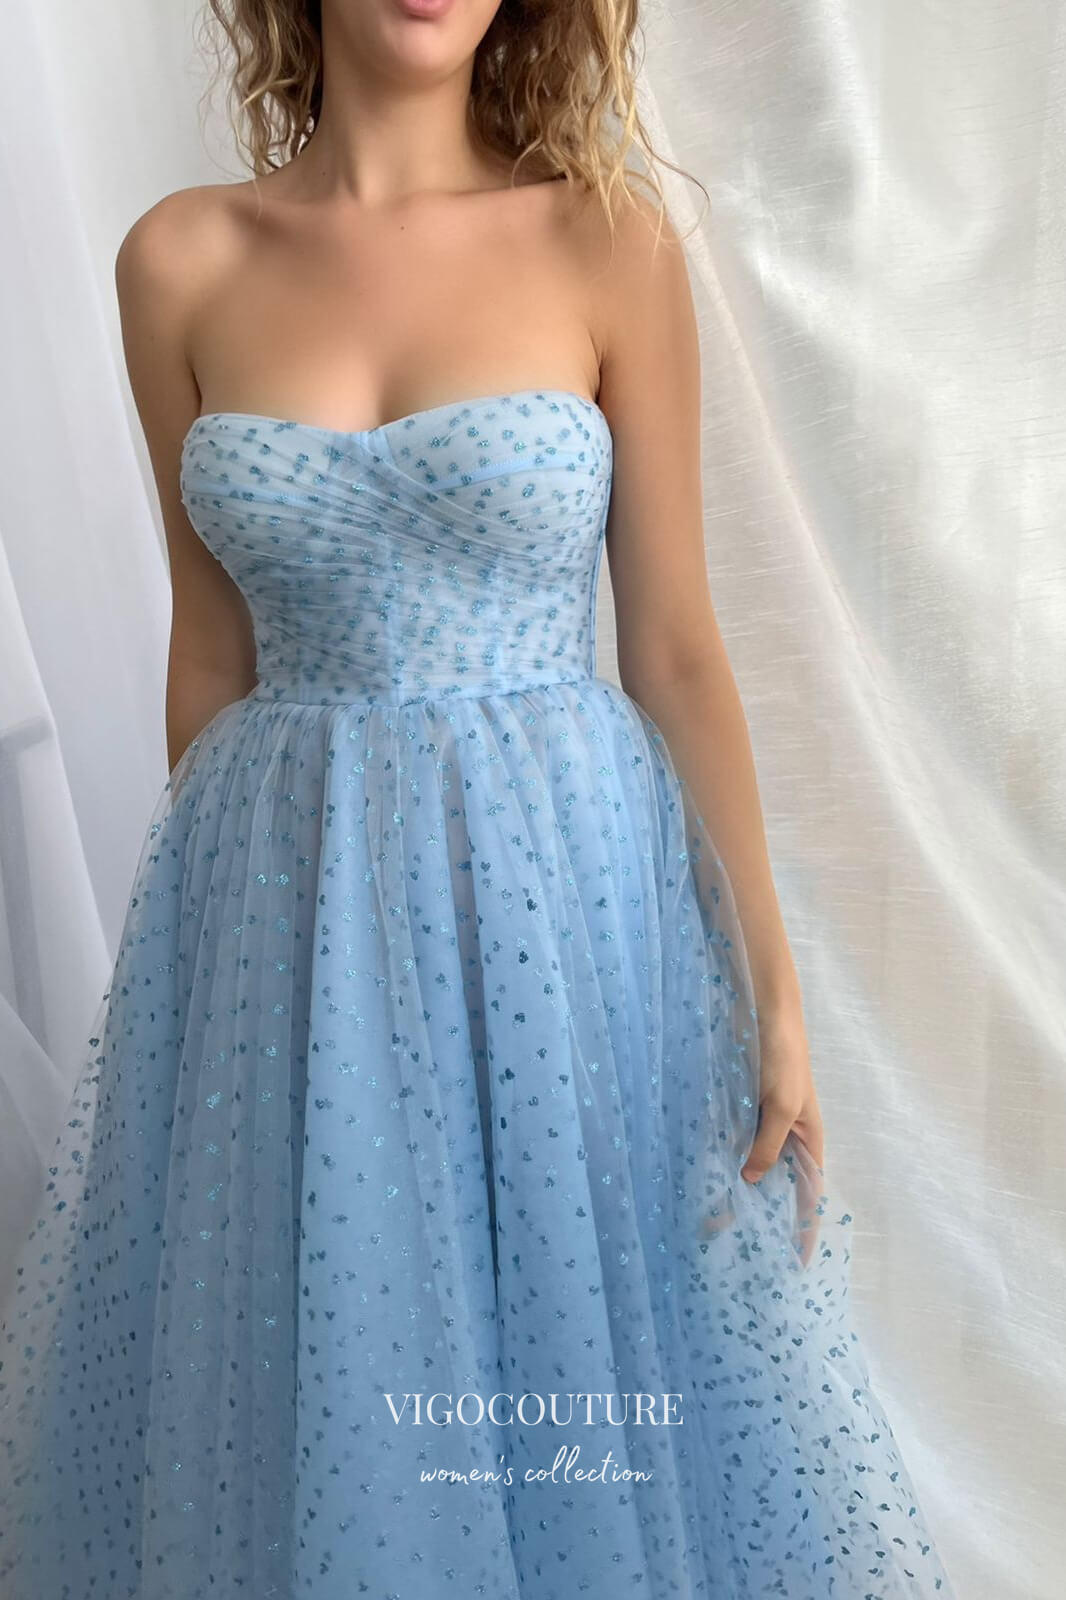 vigocouture-Printed Hearts Strapless Hoco Dresses Midi Length Homecoming Dresses hc223-Prom Dresses-vigocouture-